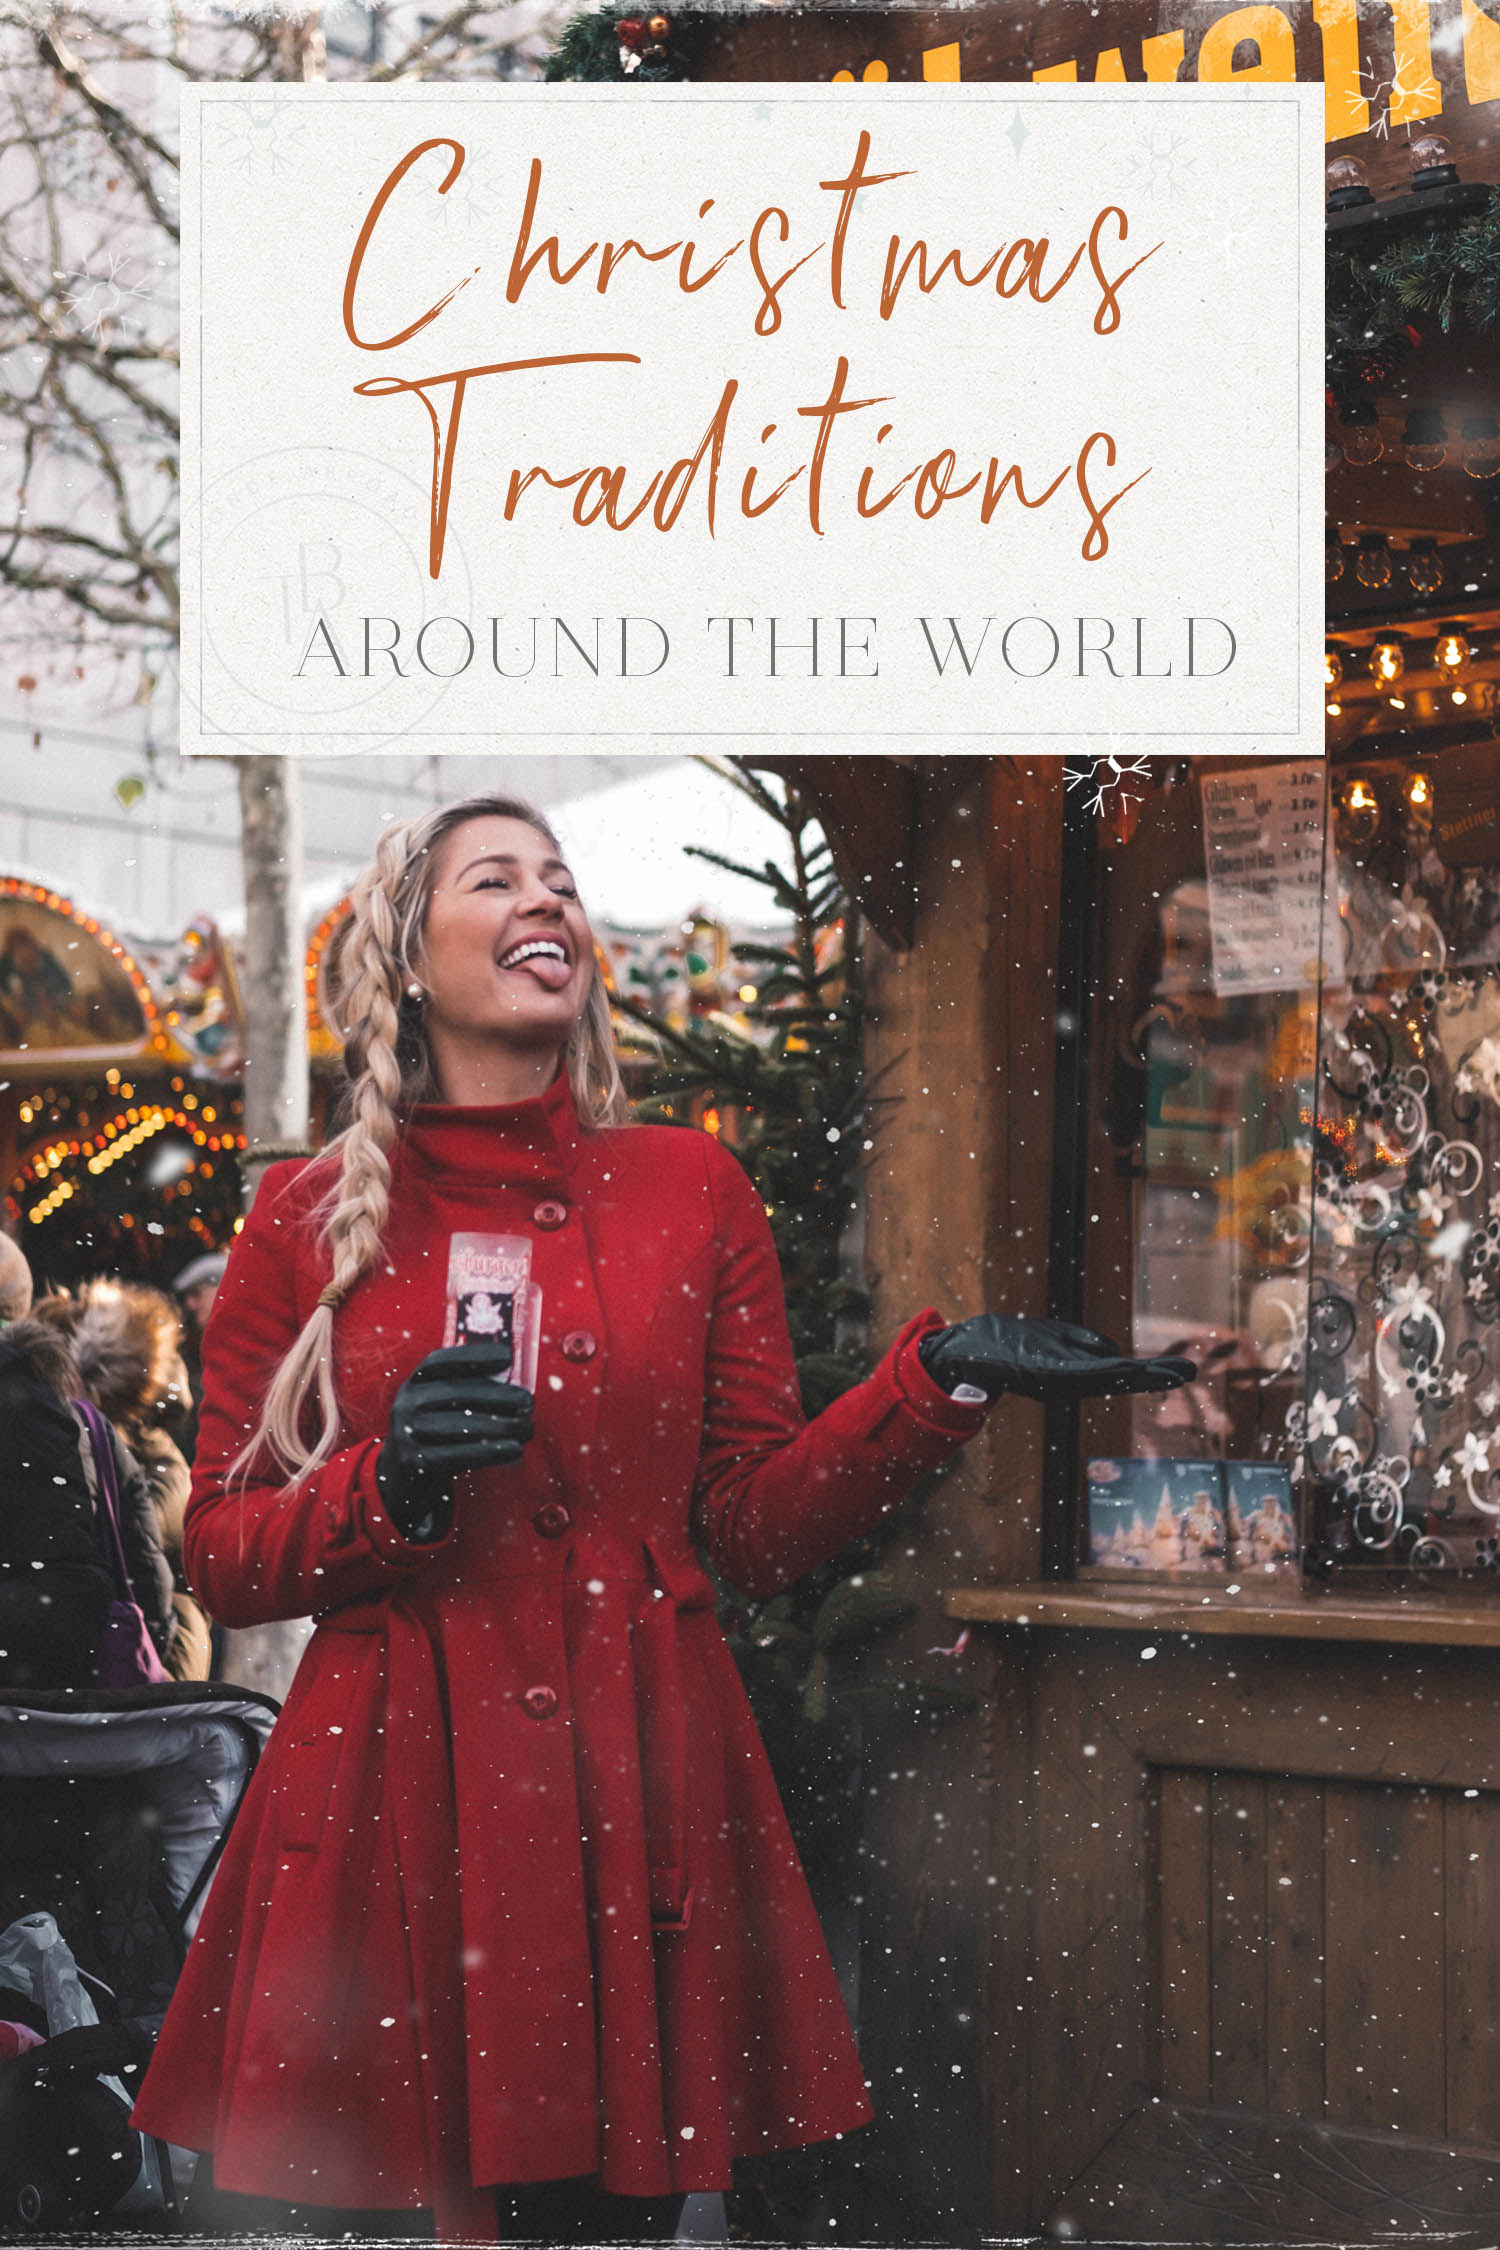 1christmas traditions around the world header